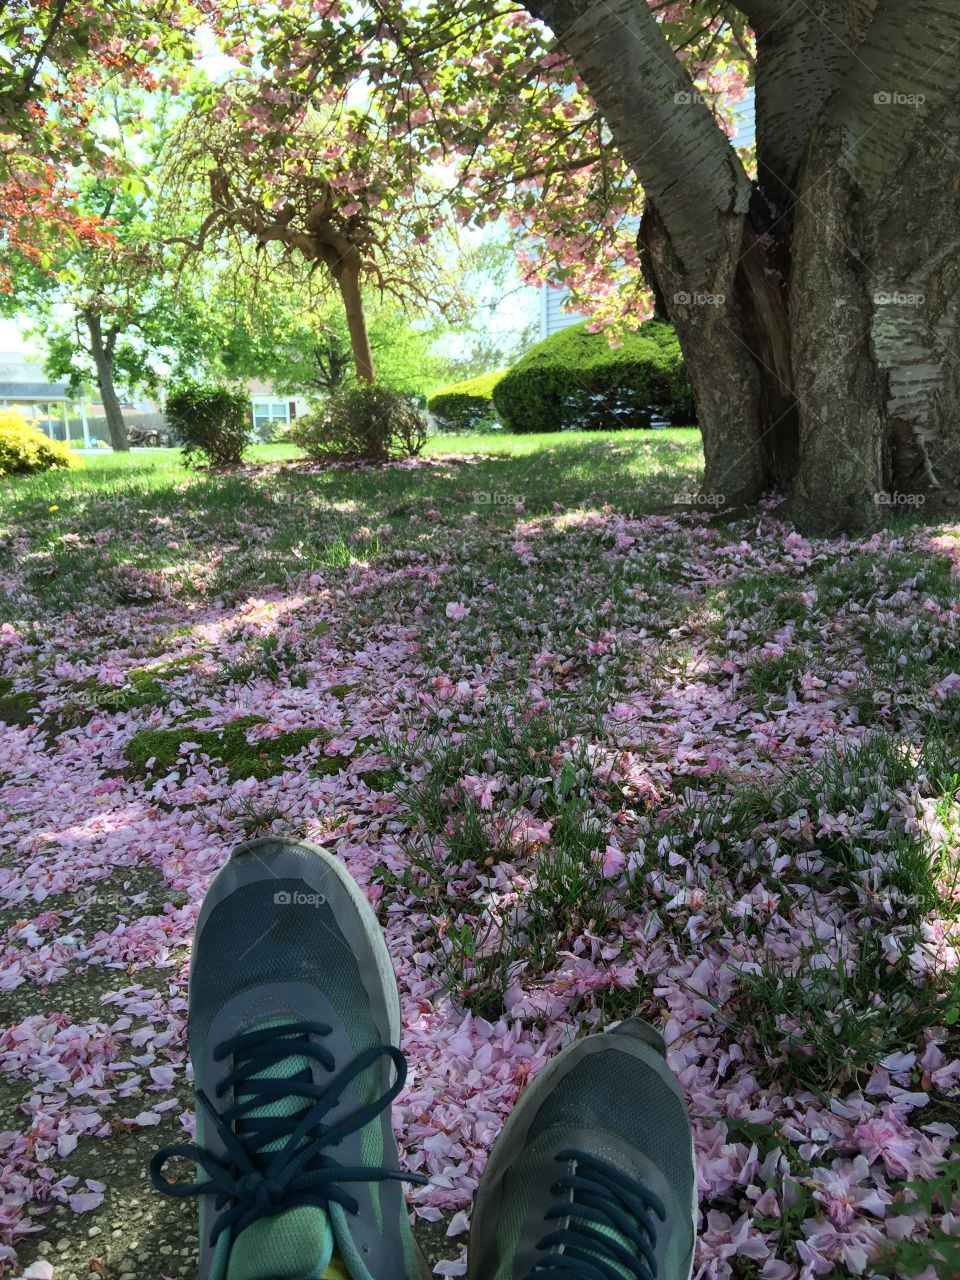 Sitting in spring